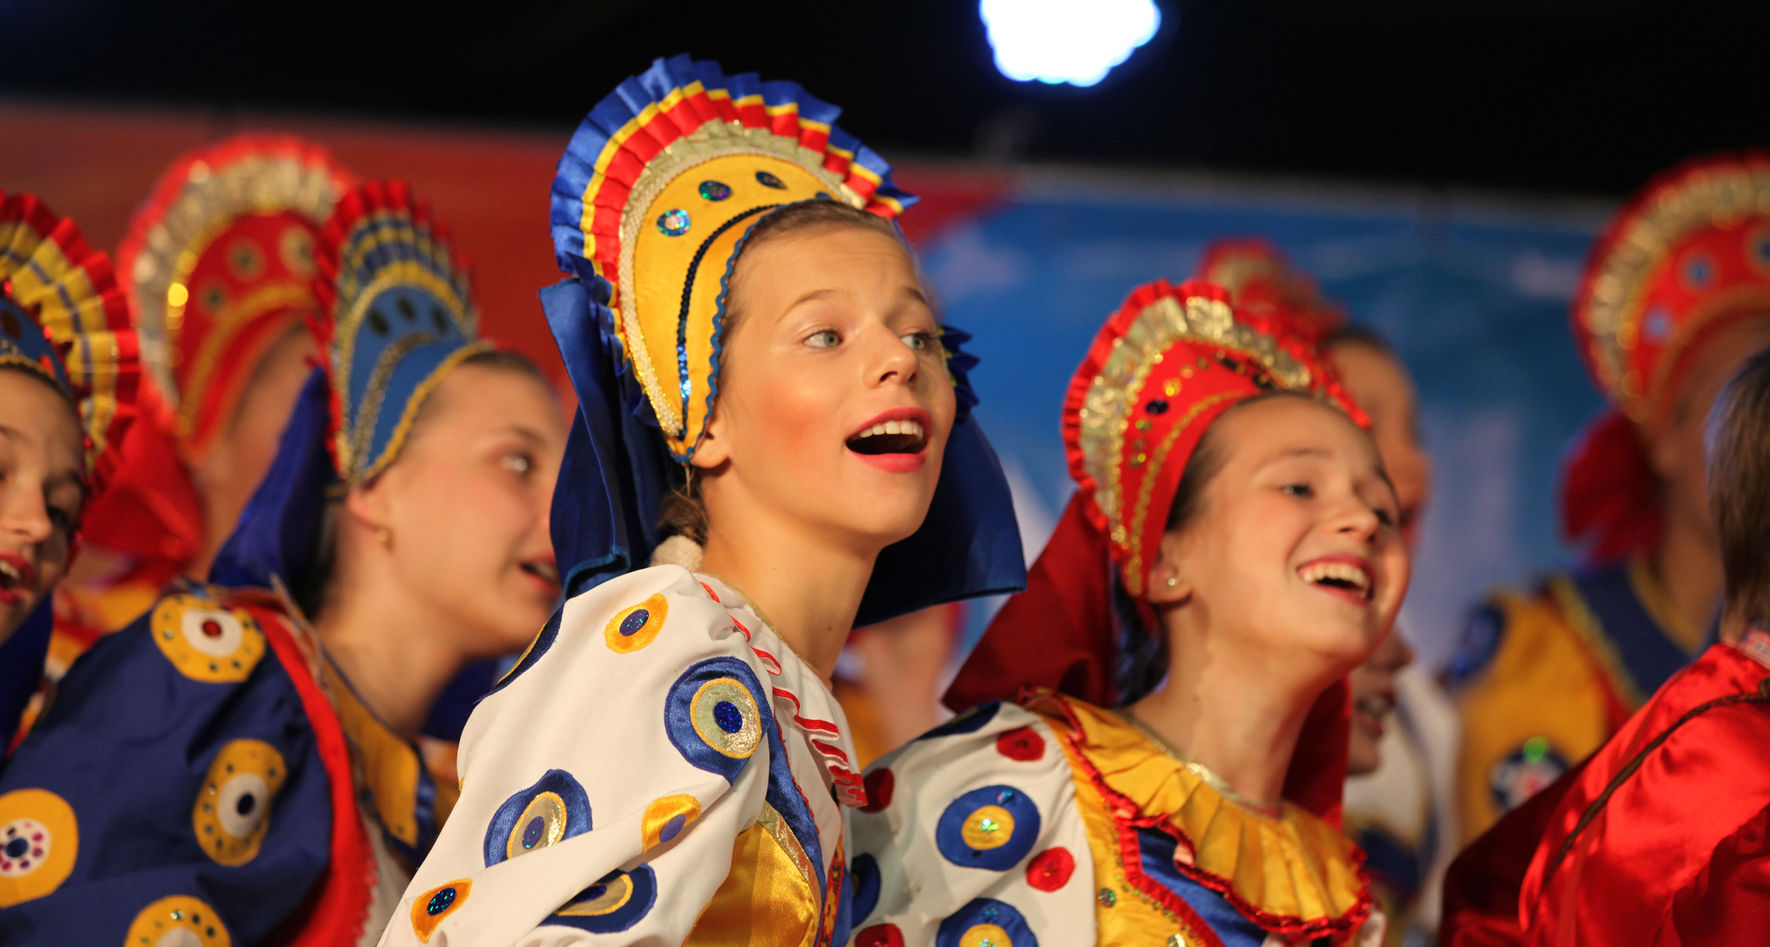 Russian Choir performing in Folklore category © Studi43